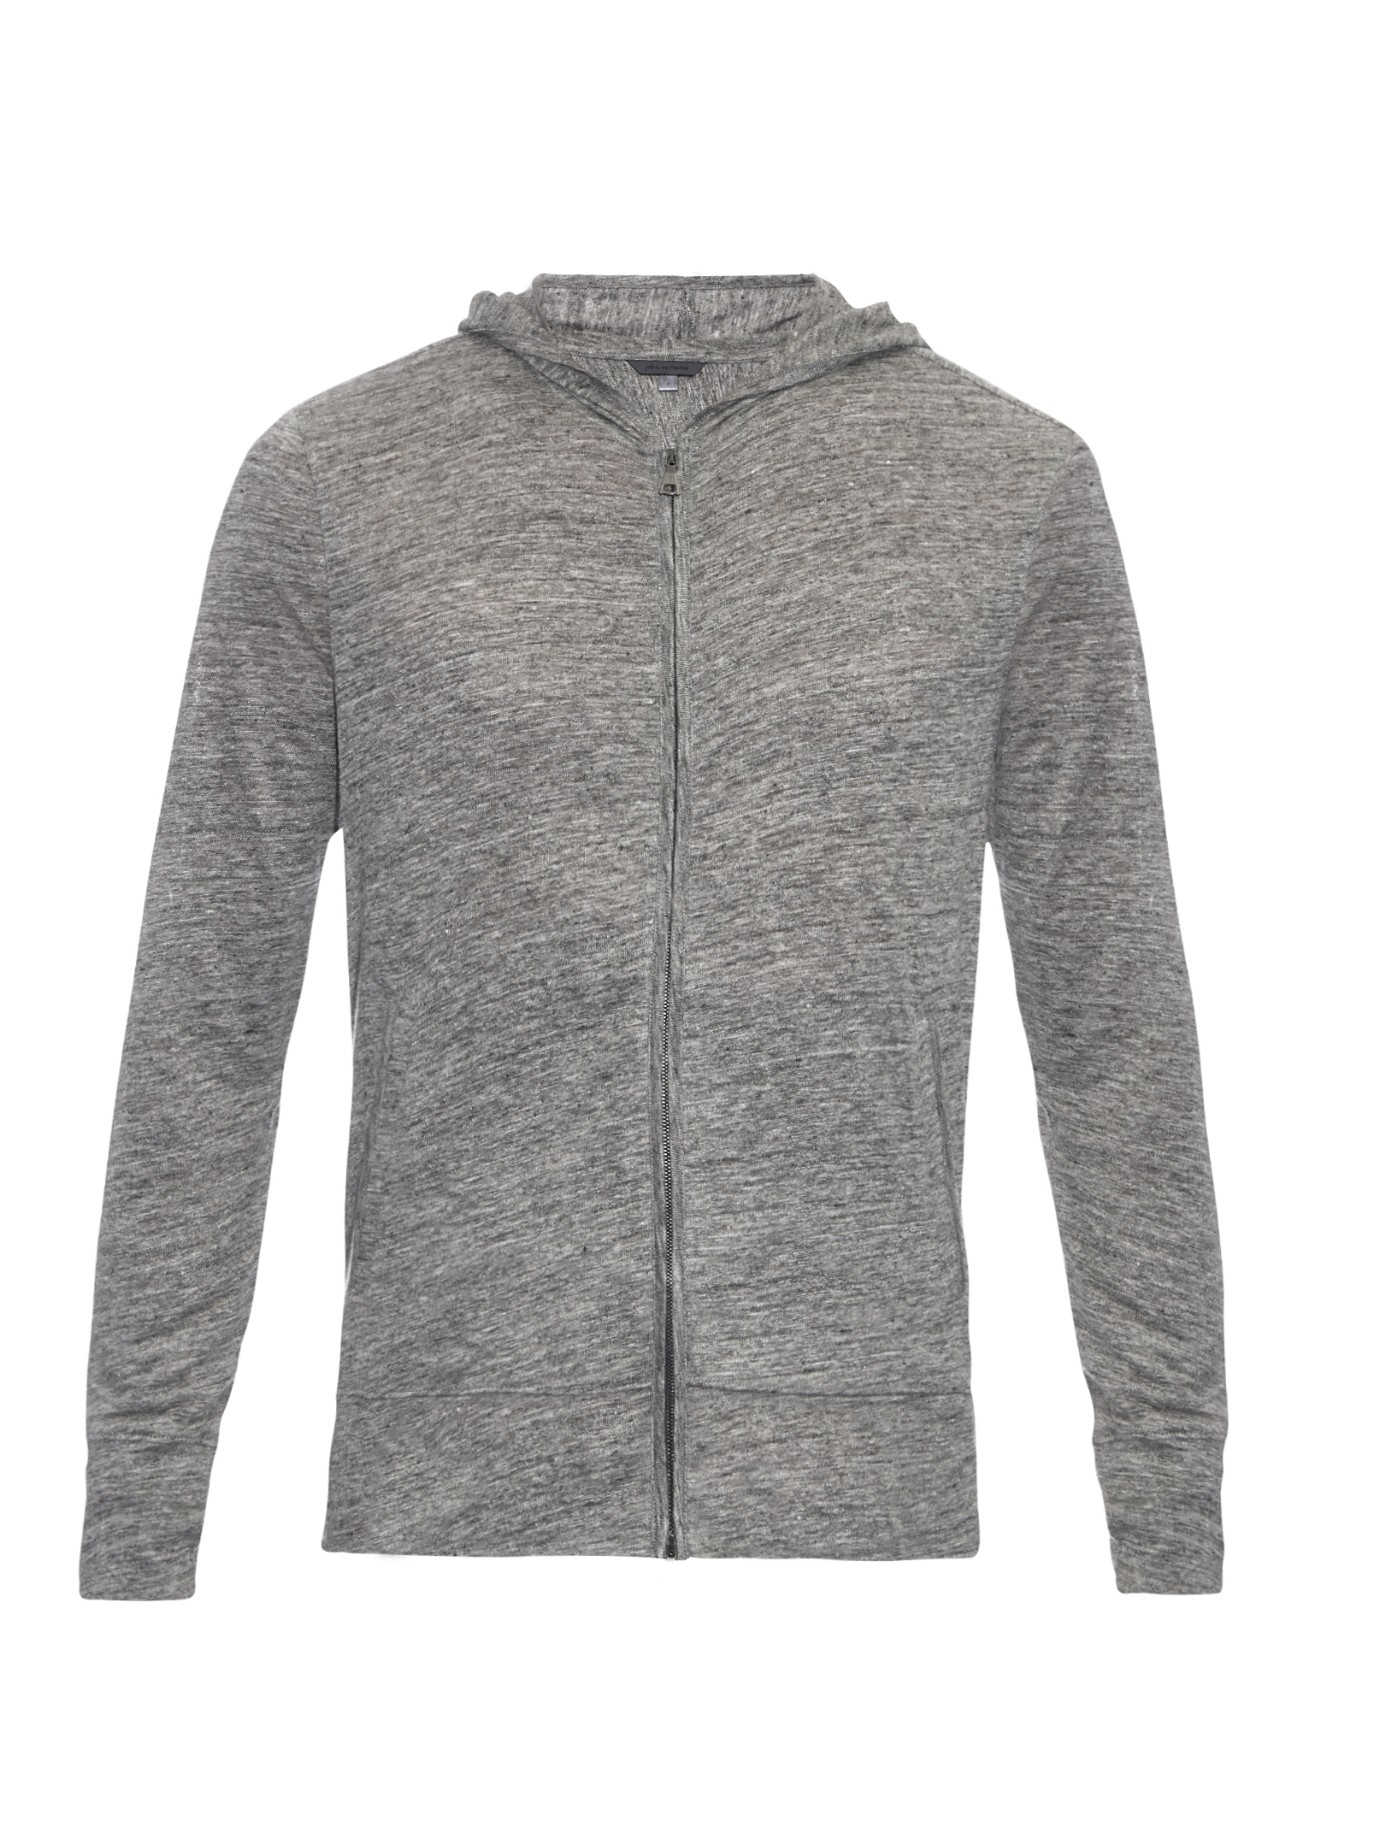 Lyst - John varvatos Linen-knit Hooded Jacket in Gray for Men